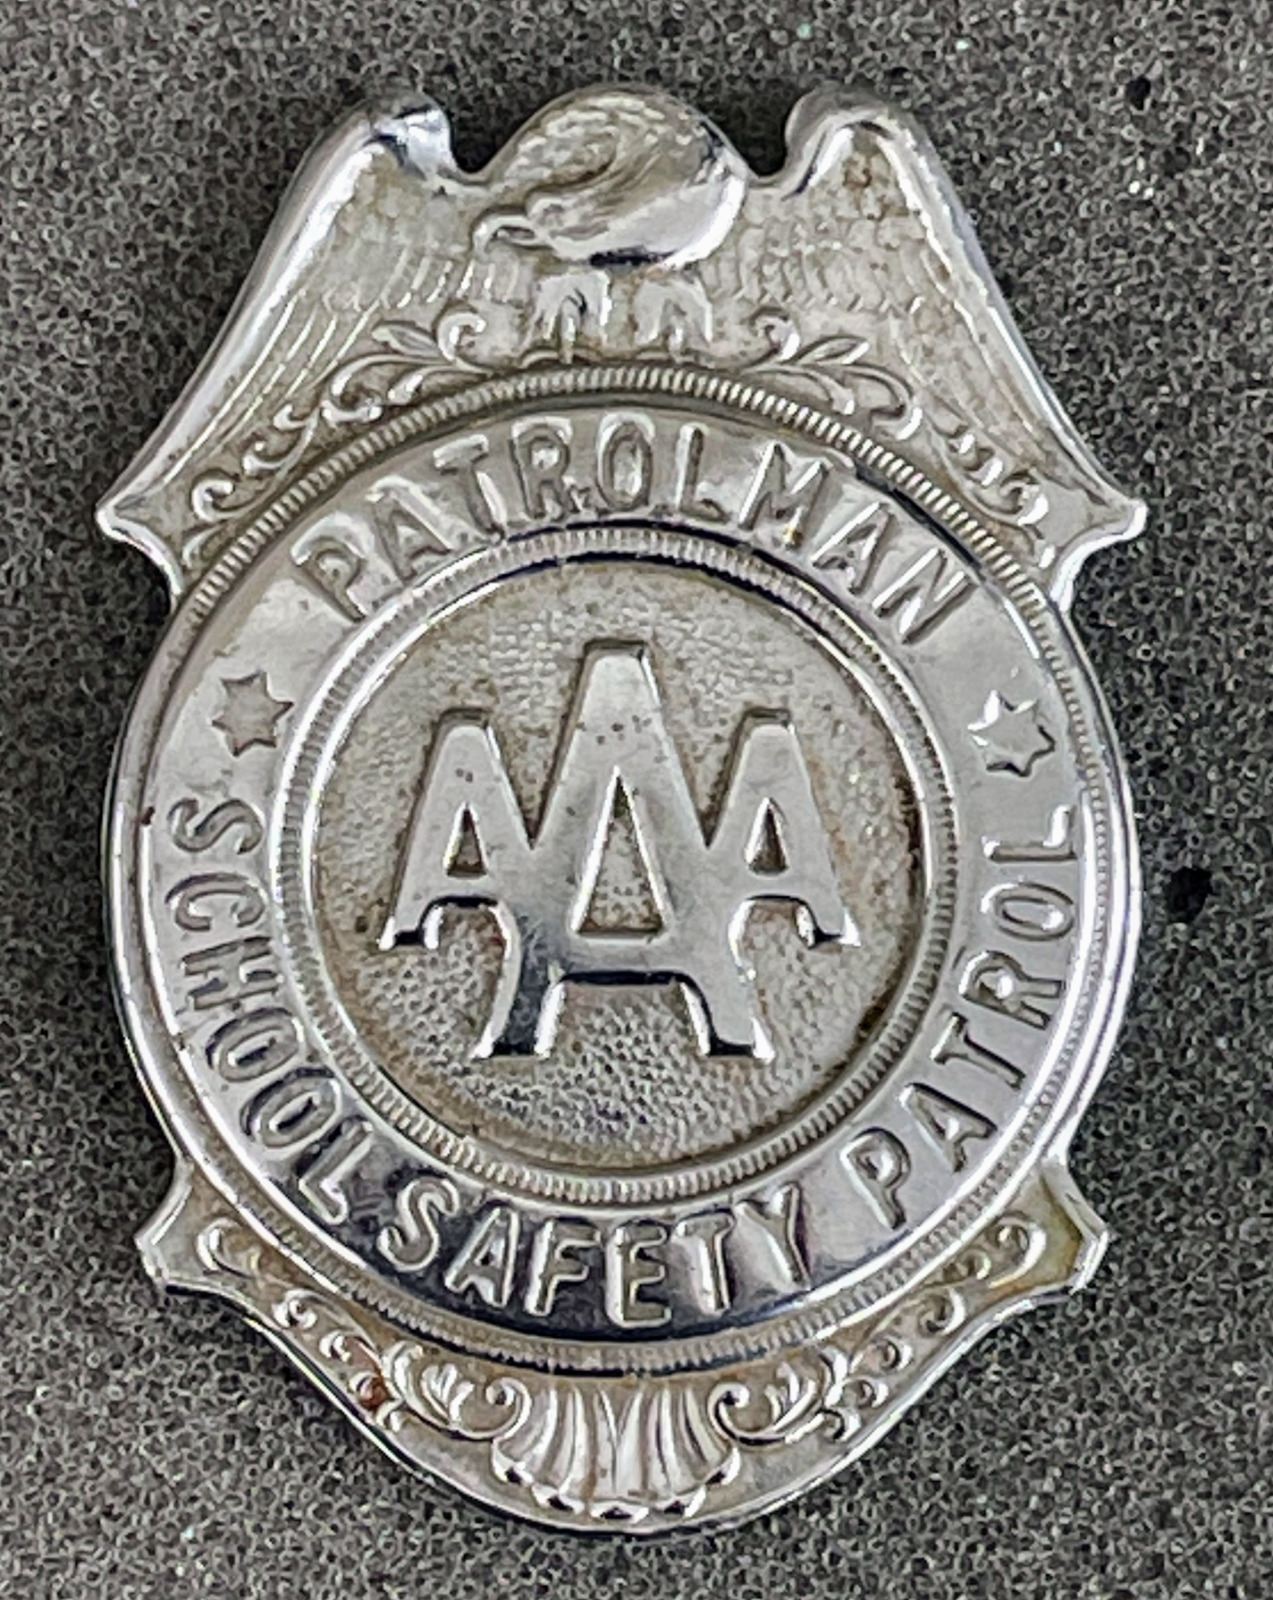 Vintage Badge AAA School Safety Patrolman Original Old Collectible Badges 